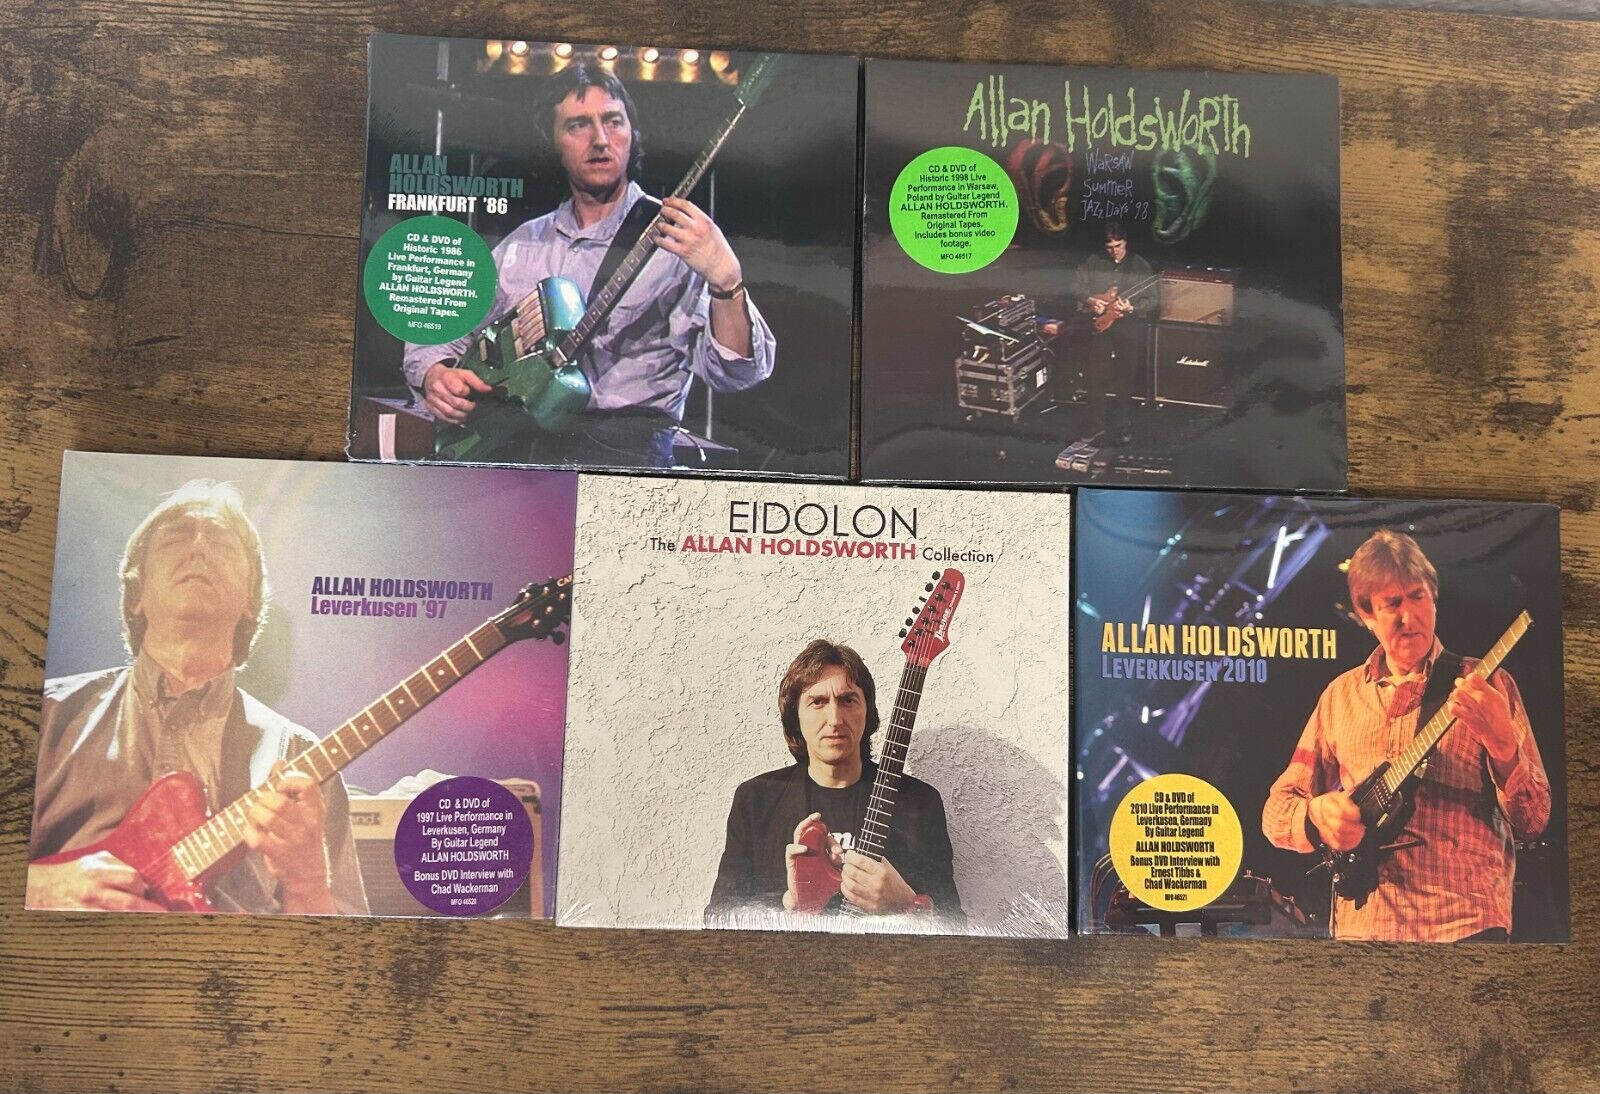 Allan Holdsworth - 4 Live CD/DVD Bundle and Eidolon: Best of Allan Holdsworth